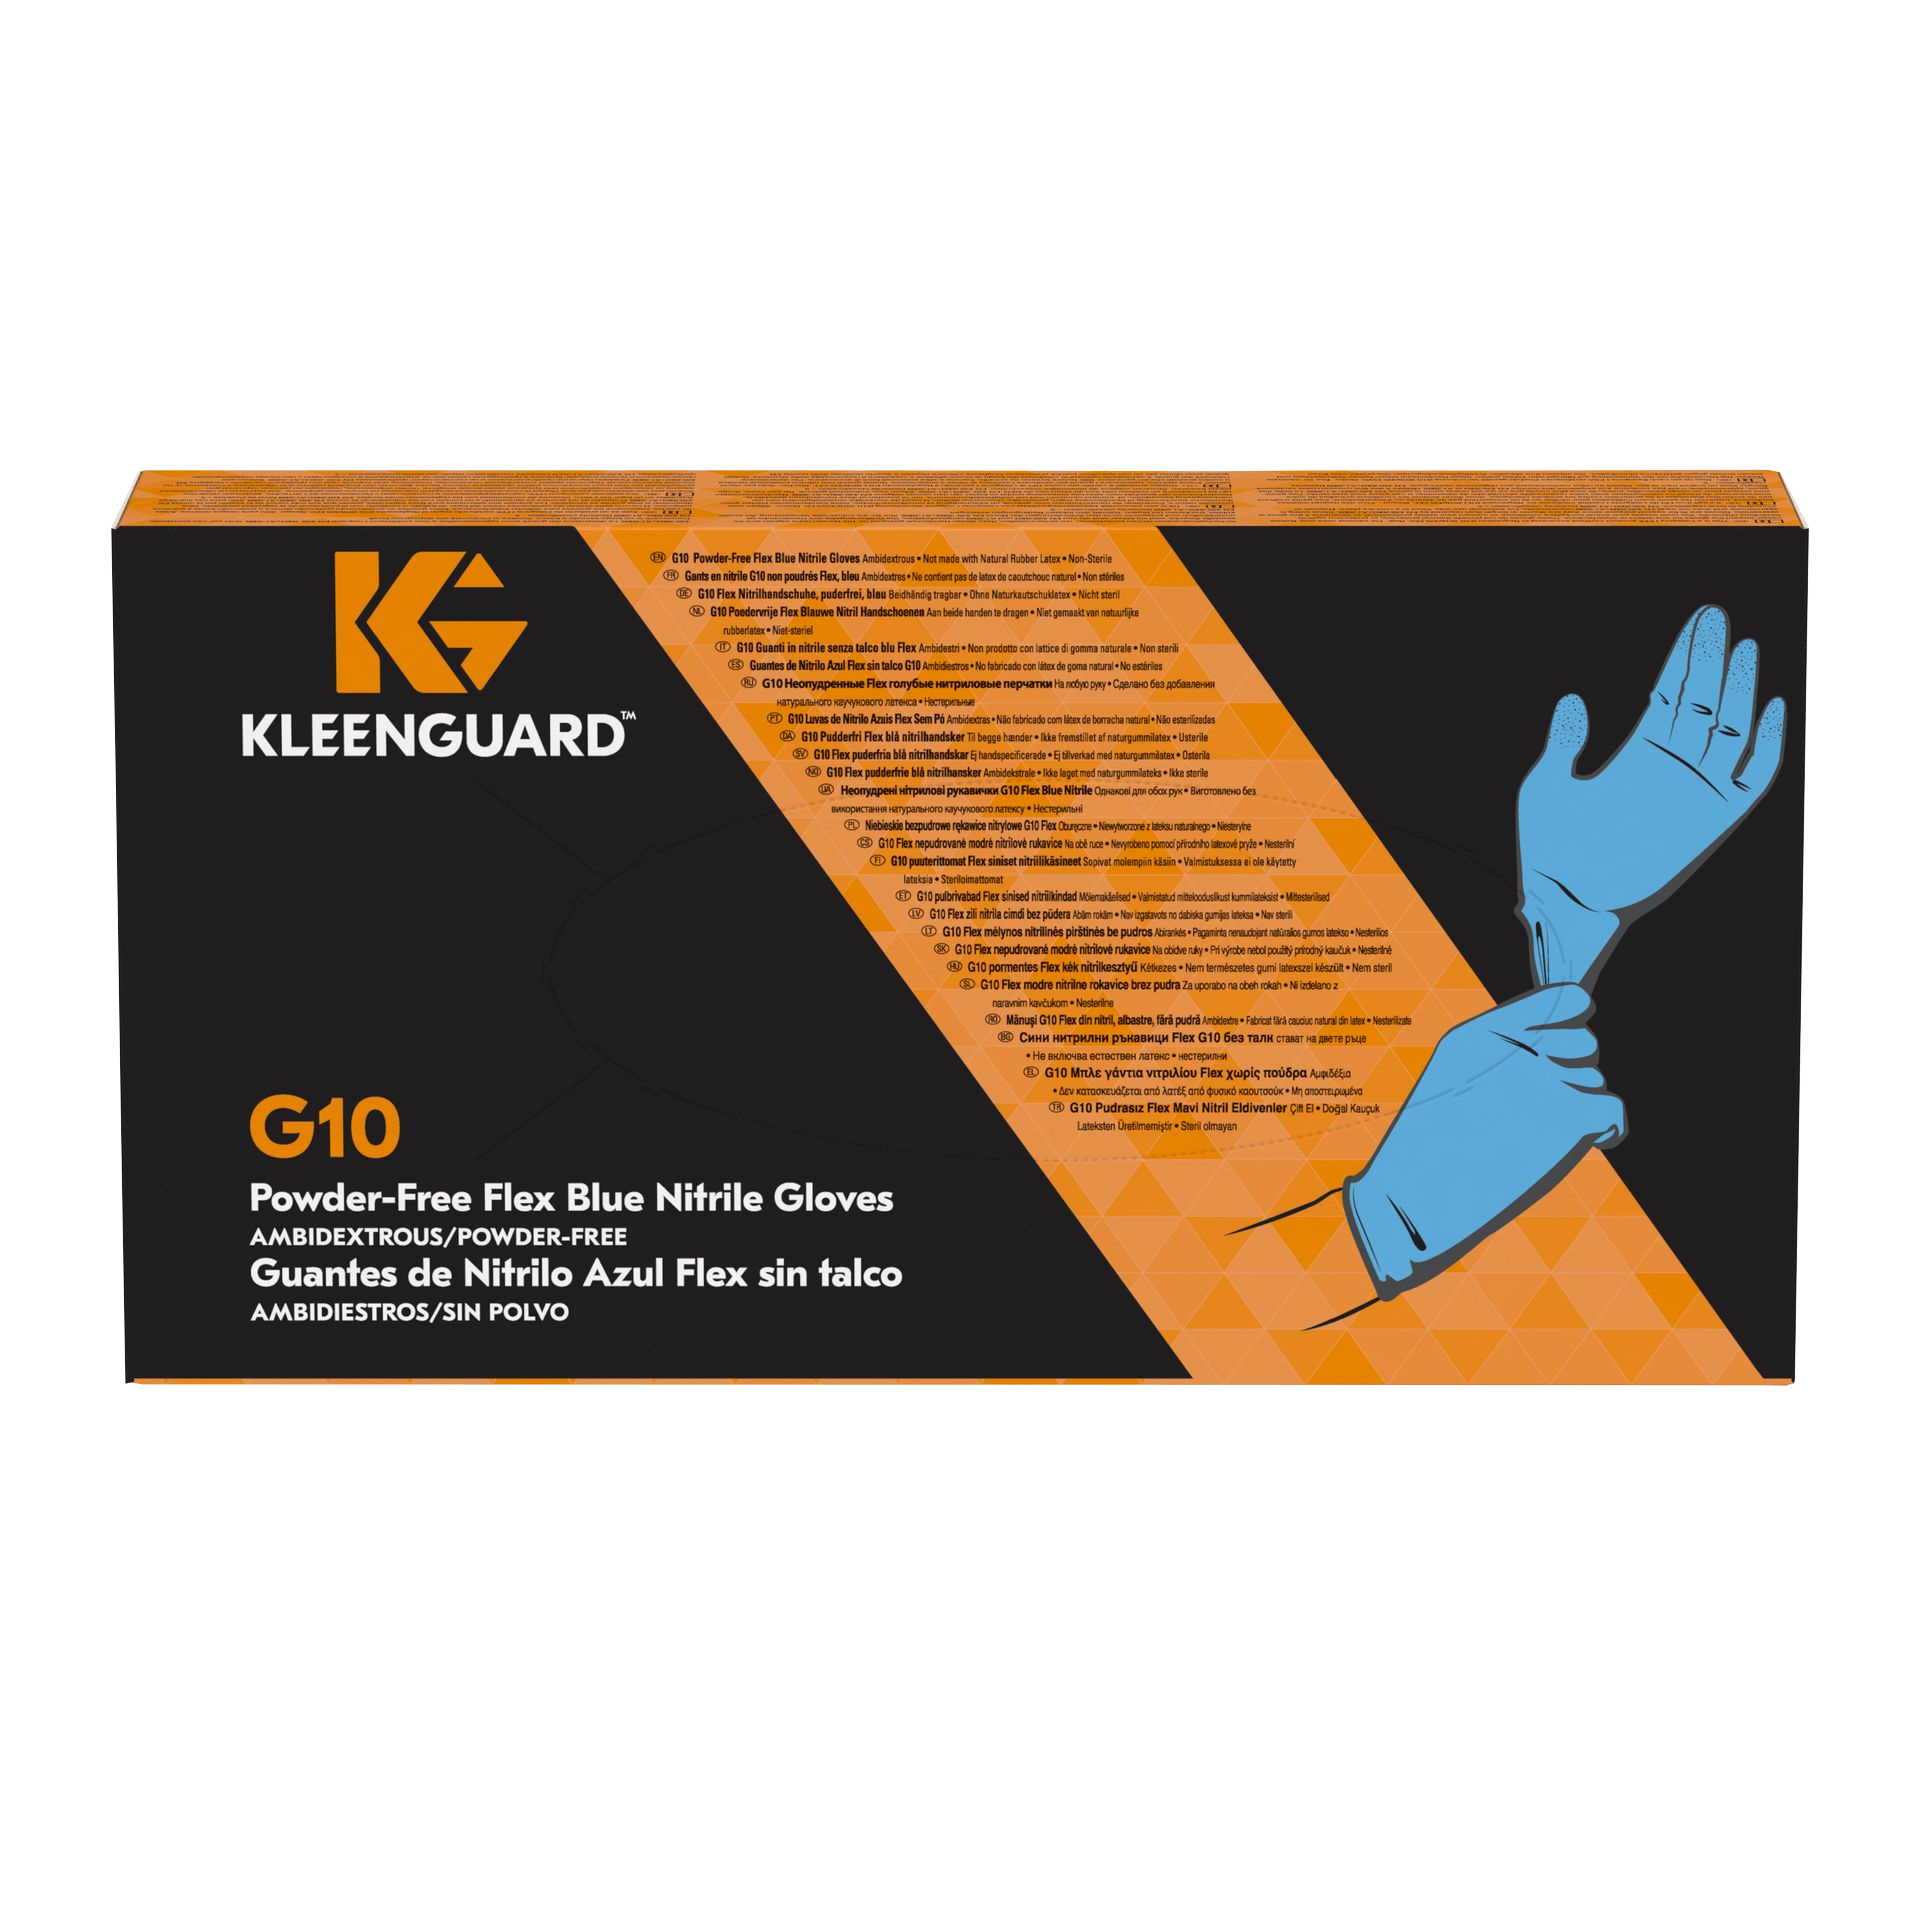 KleenGuard® Guante desechable  G10 2Pro, 30241474, Guantes de Protección, Talla S,  10 cajas x 100 guantes (1000 en total) - S060713728